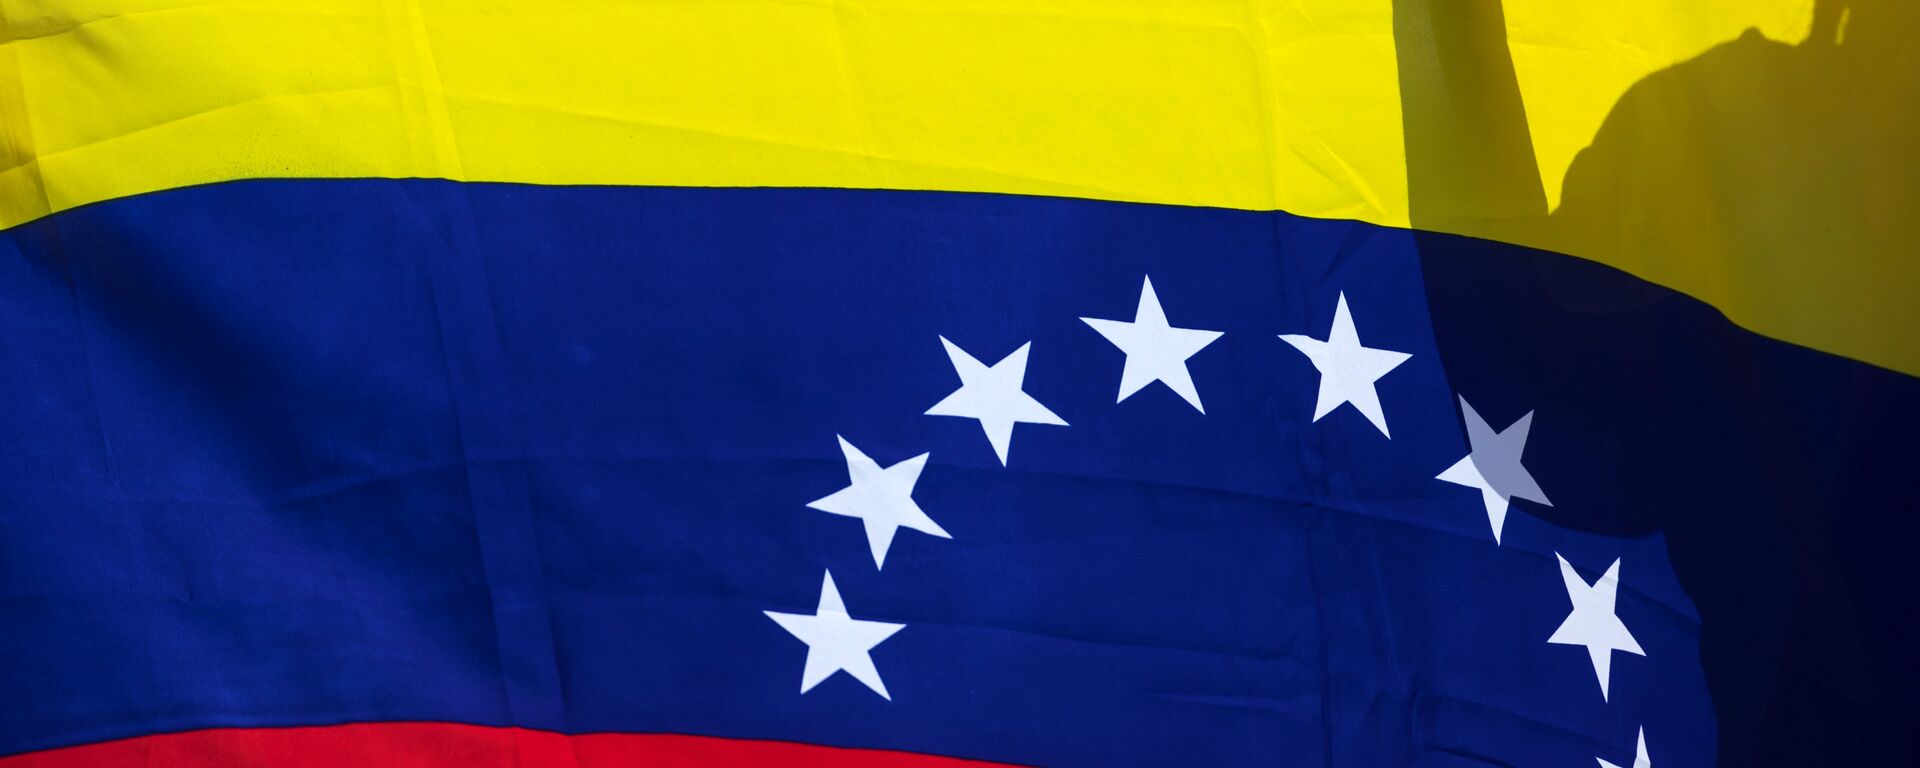 Bandera de Venezuela - Sputnik Mundo, 1920, 24.08.2021